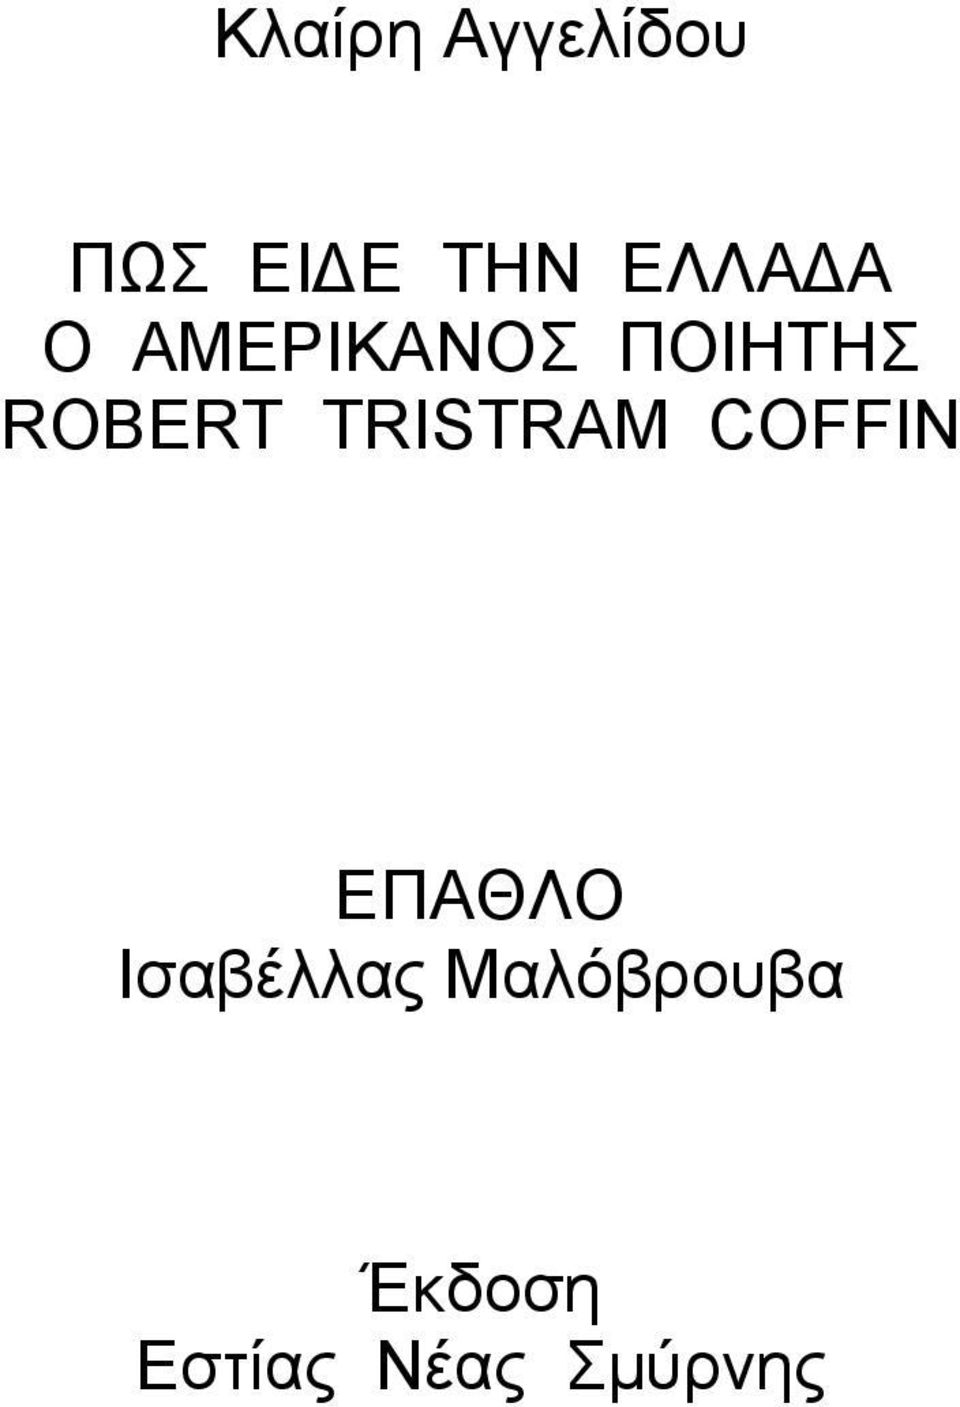 ROBERT TRISTRAM COFFIN ΕΠΑΘΛΟ